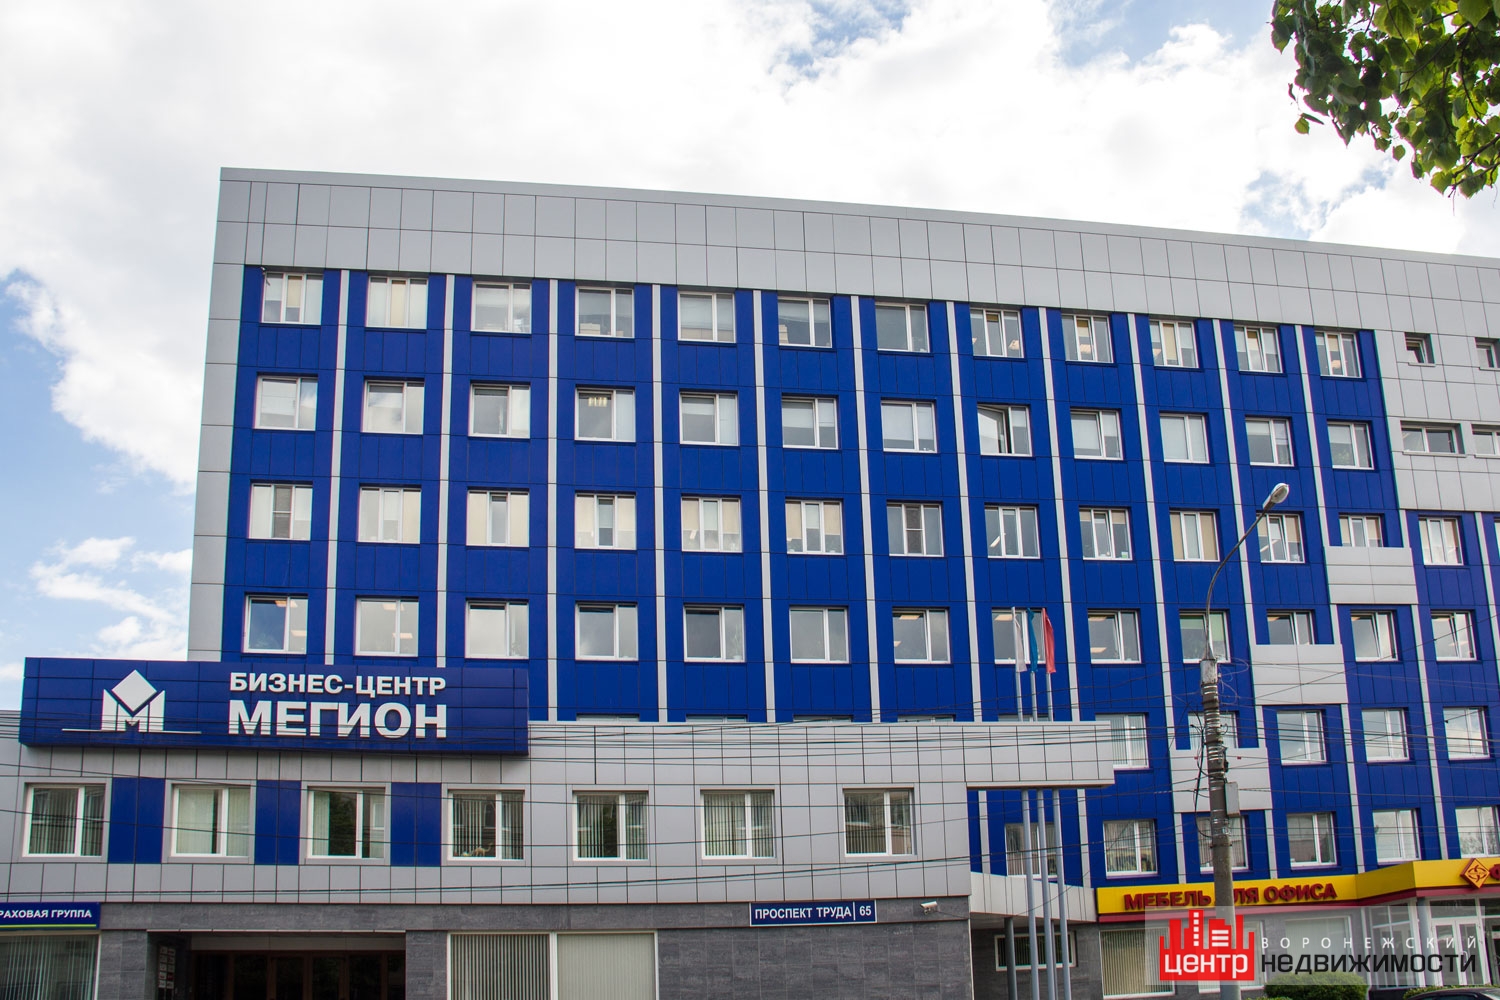 Бизнес-центр «Мегион» в Воронеже — описание, фото, адрес, телефон